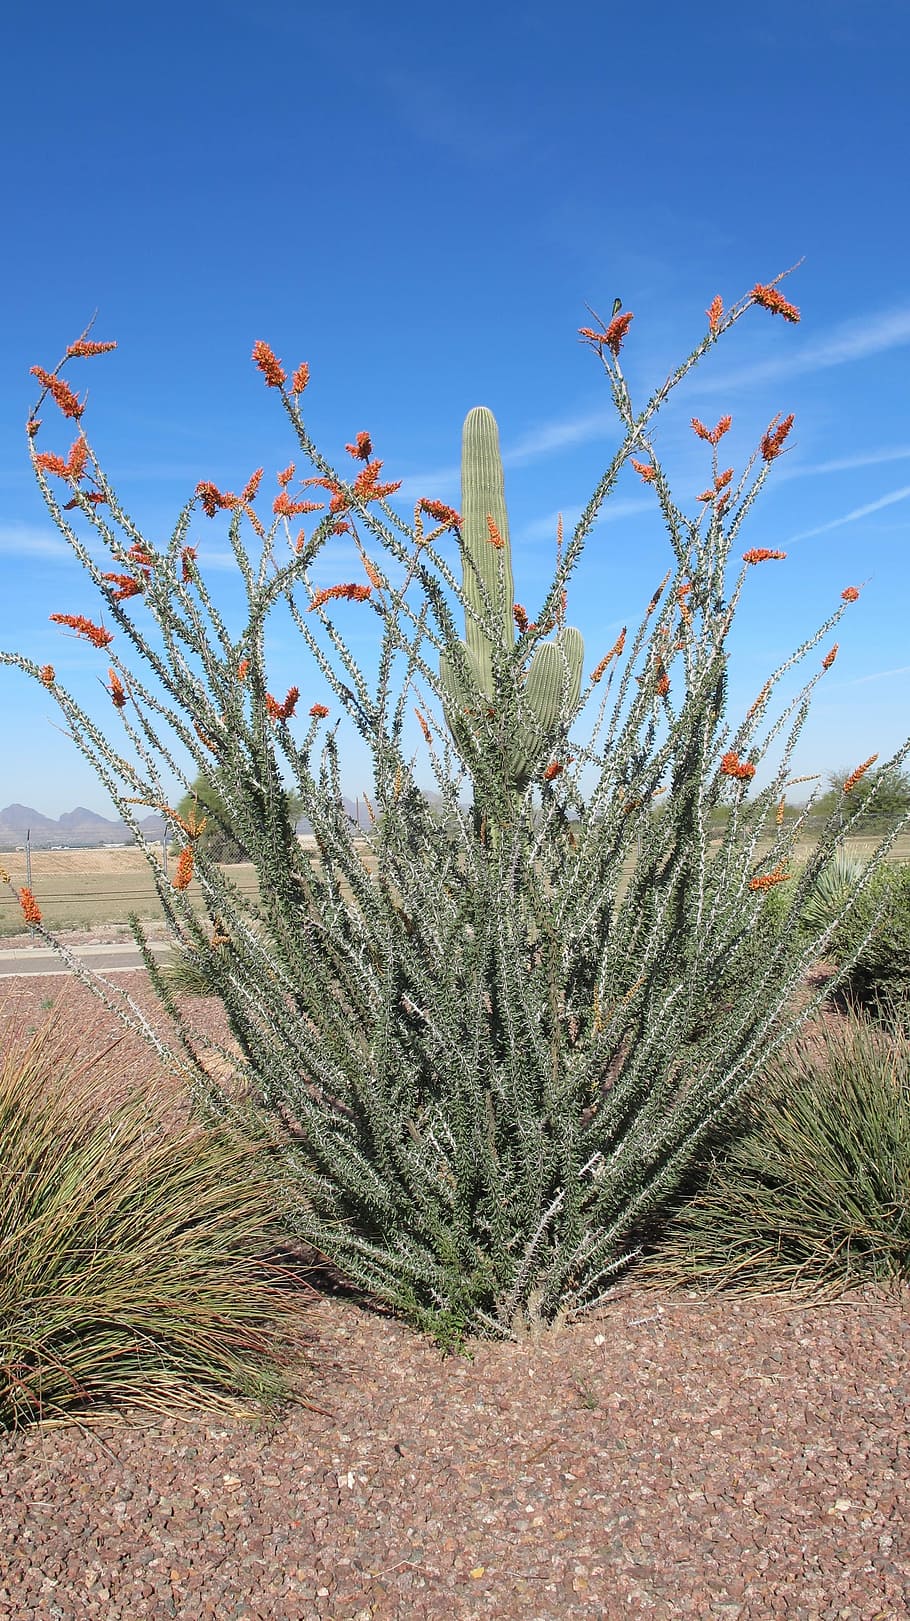 Most Common Desert Plants